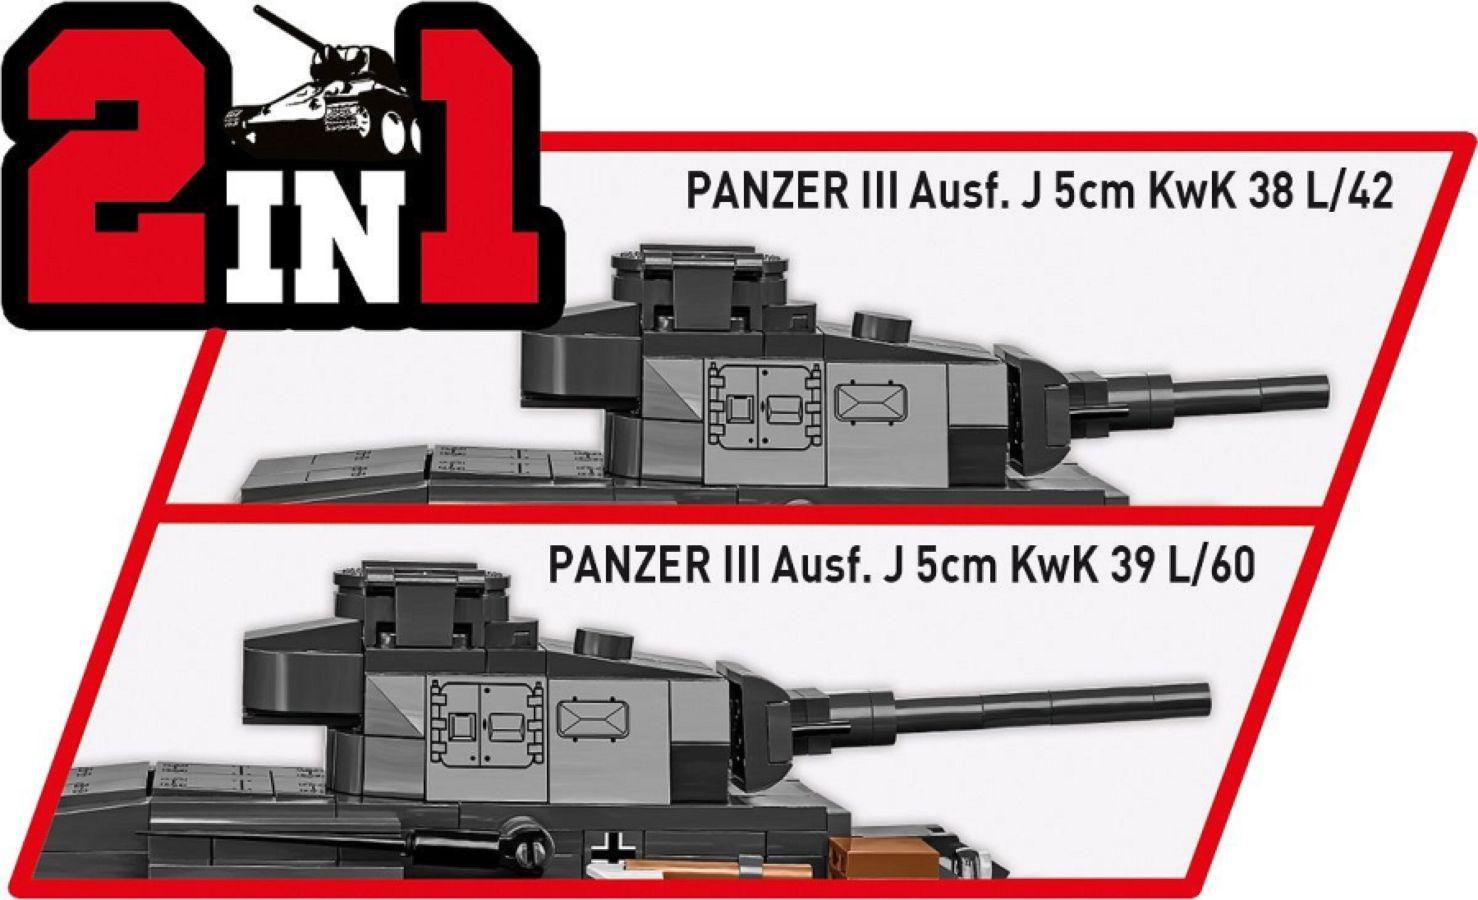 COB2289 World War 2 - Panzer III Ausf.J (590 Piece Kit) - Cobi - Titan Pop Culture